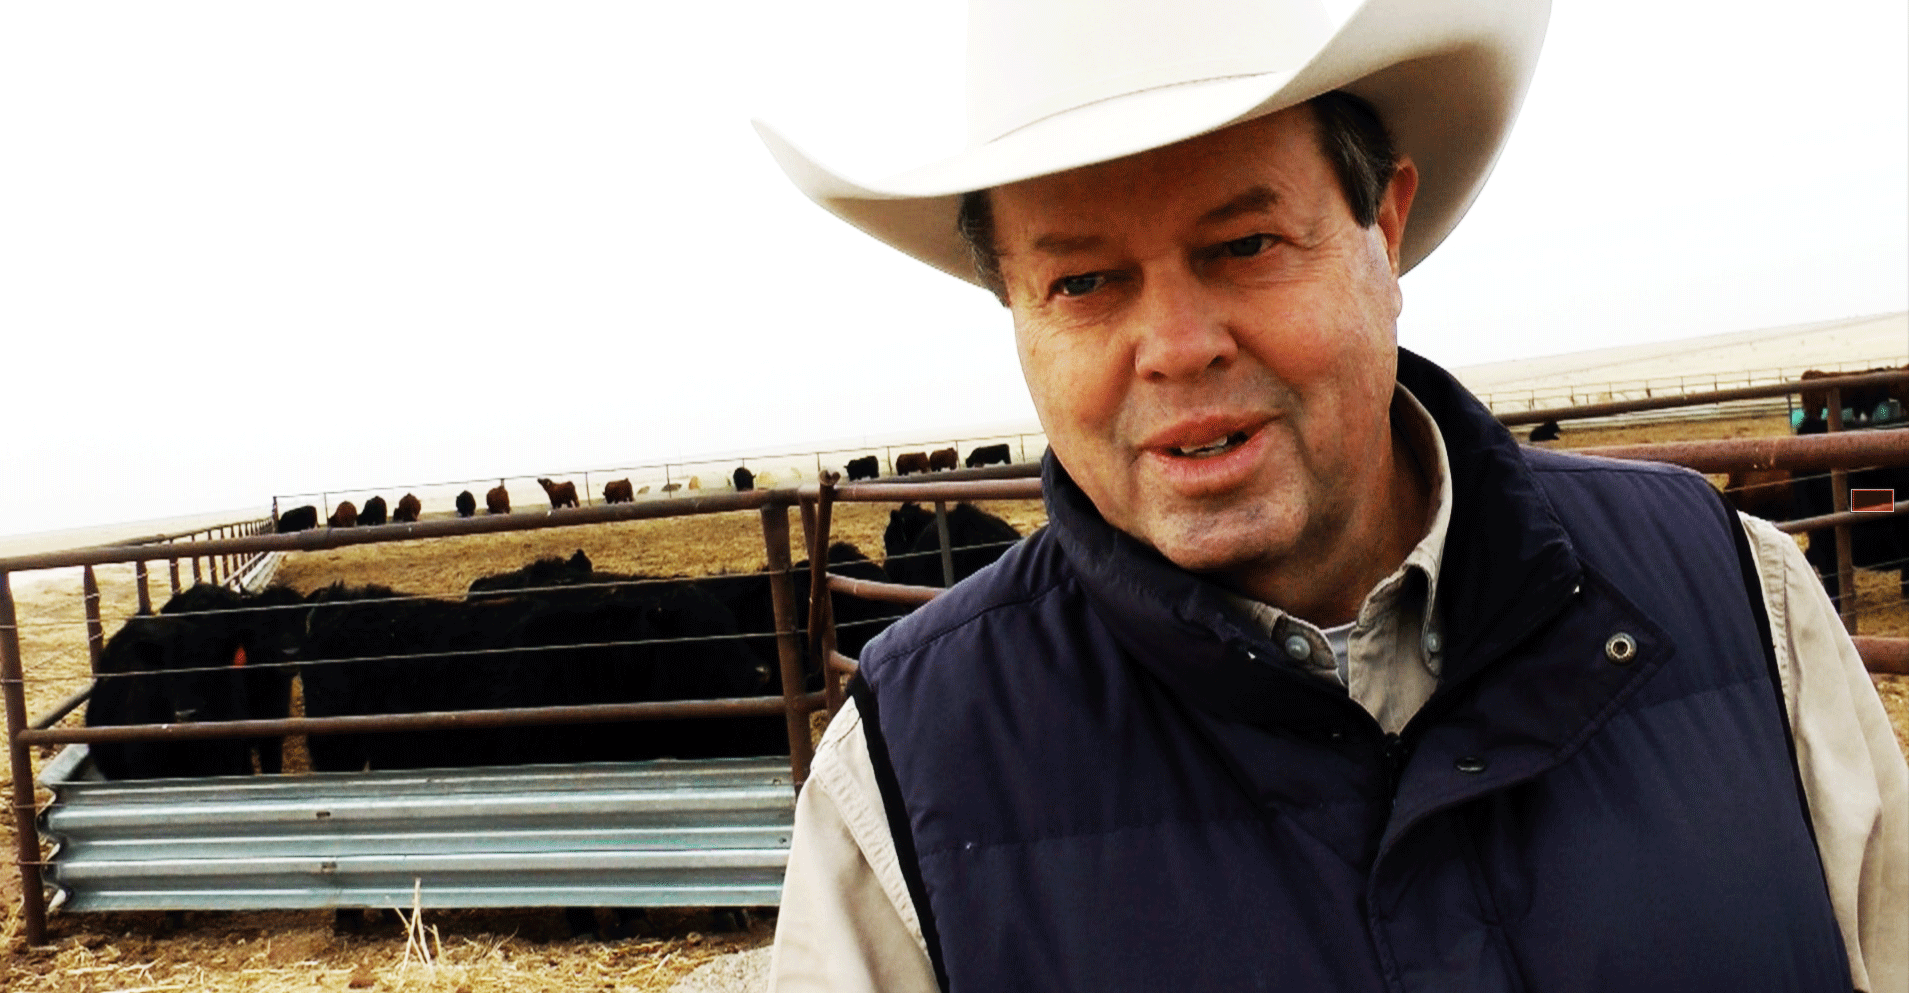 Texas ranchear John Perrin